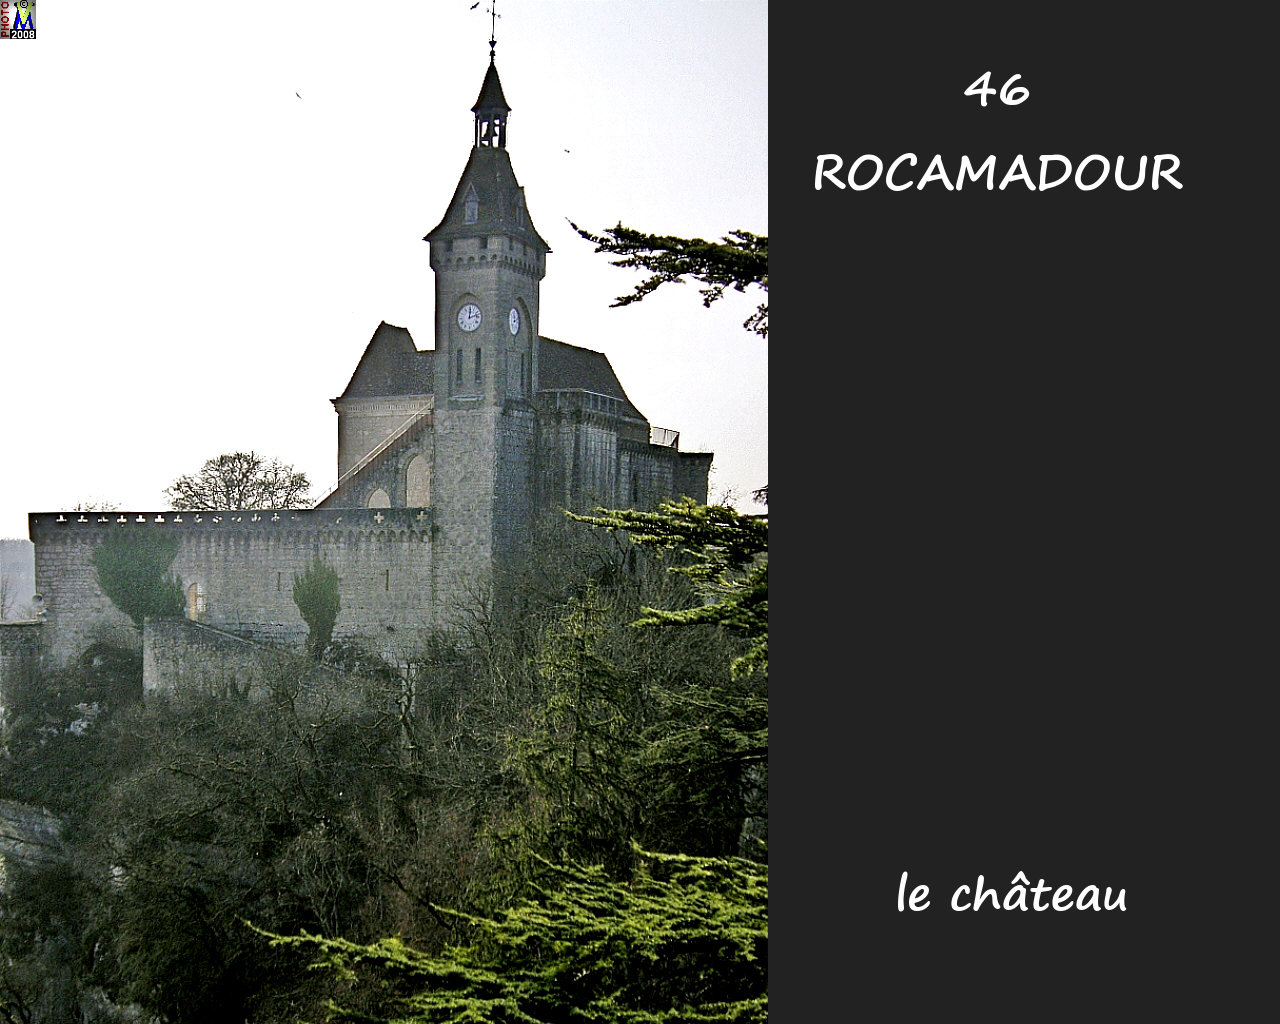 46ROCAMADOUR_chateau_106.jpg